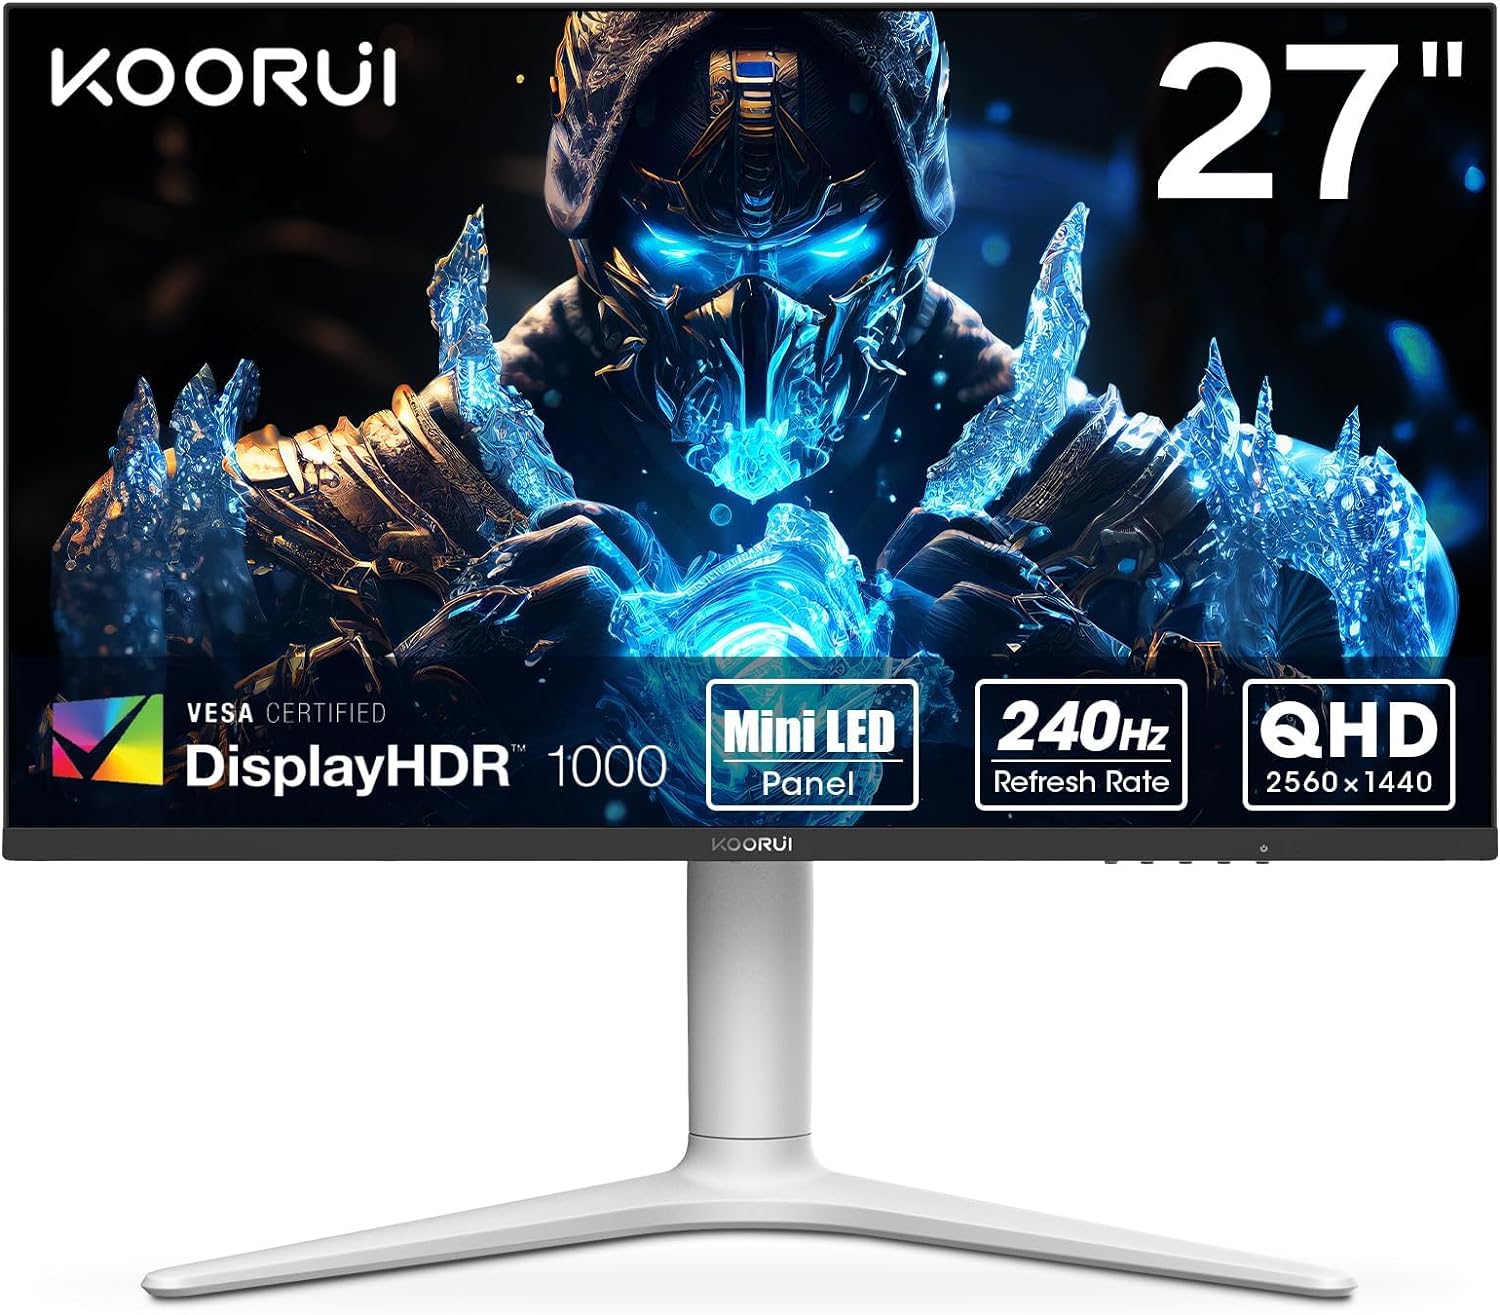 KOORUI GN10 27” Gaming Monitor, WQHD (2560 x 1440), 240HZ, Mini-LED, 95%  DCI-P3 99% Adobe RGB 100% sRGB, Display HDR 1000, Tilt Pivot Swivel Height  Adjustable, HDMI, DisplayPort, White/Grey-Koorui